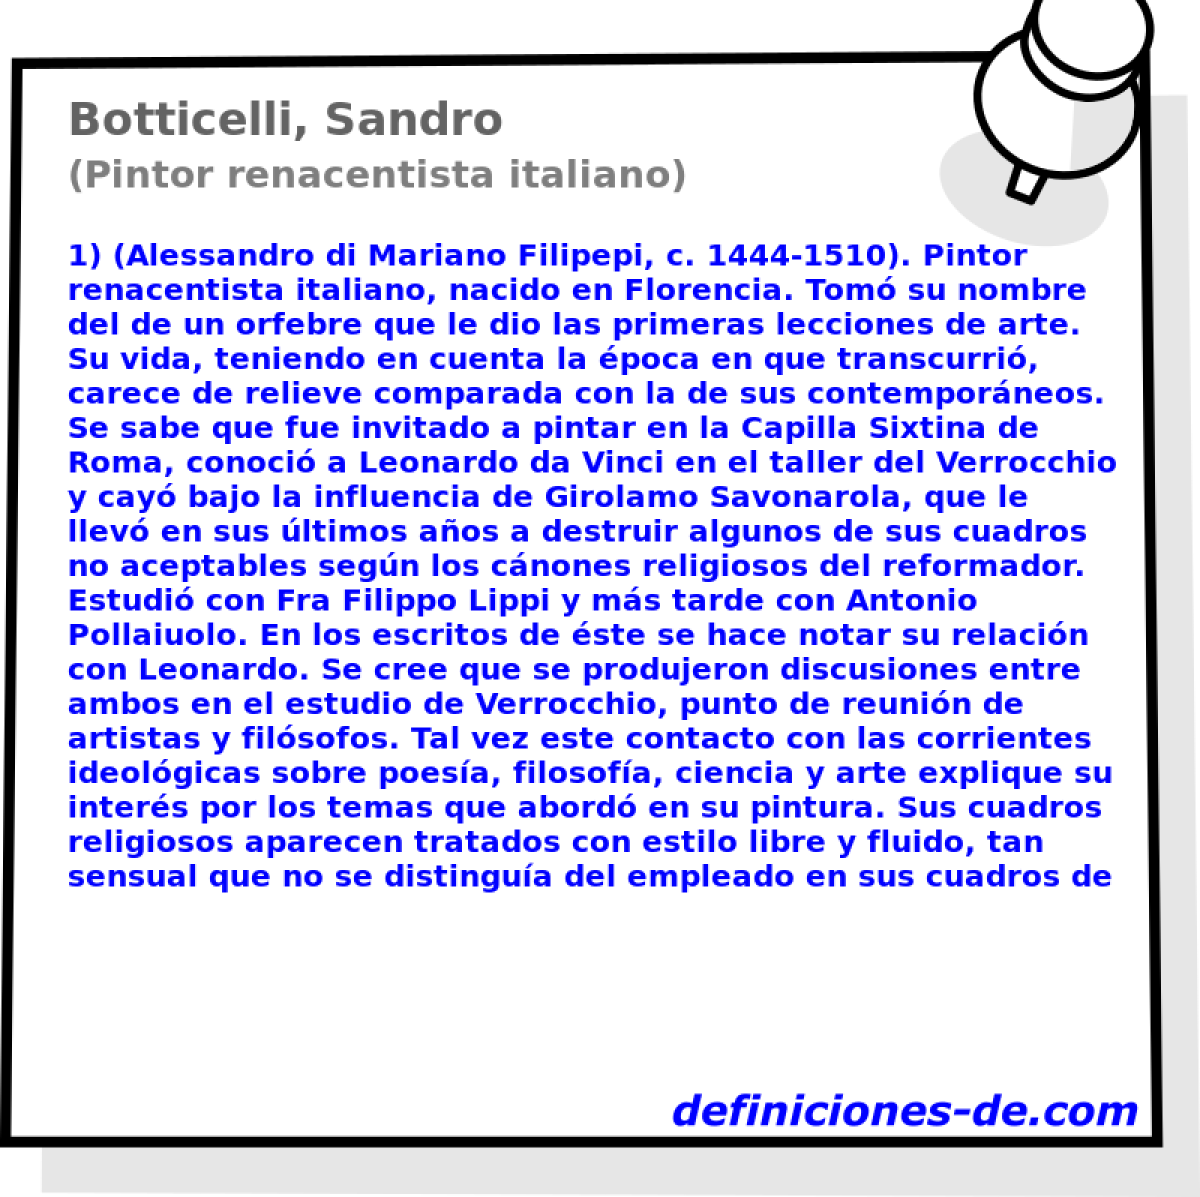 Botticelli, Sandro (Pintor renacentista italiano)